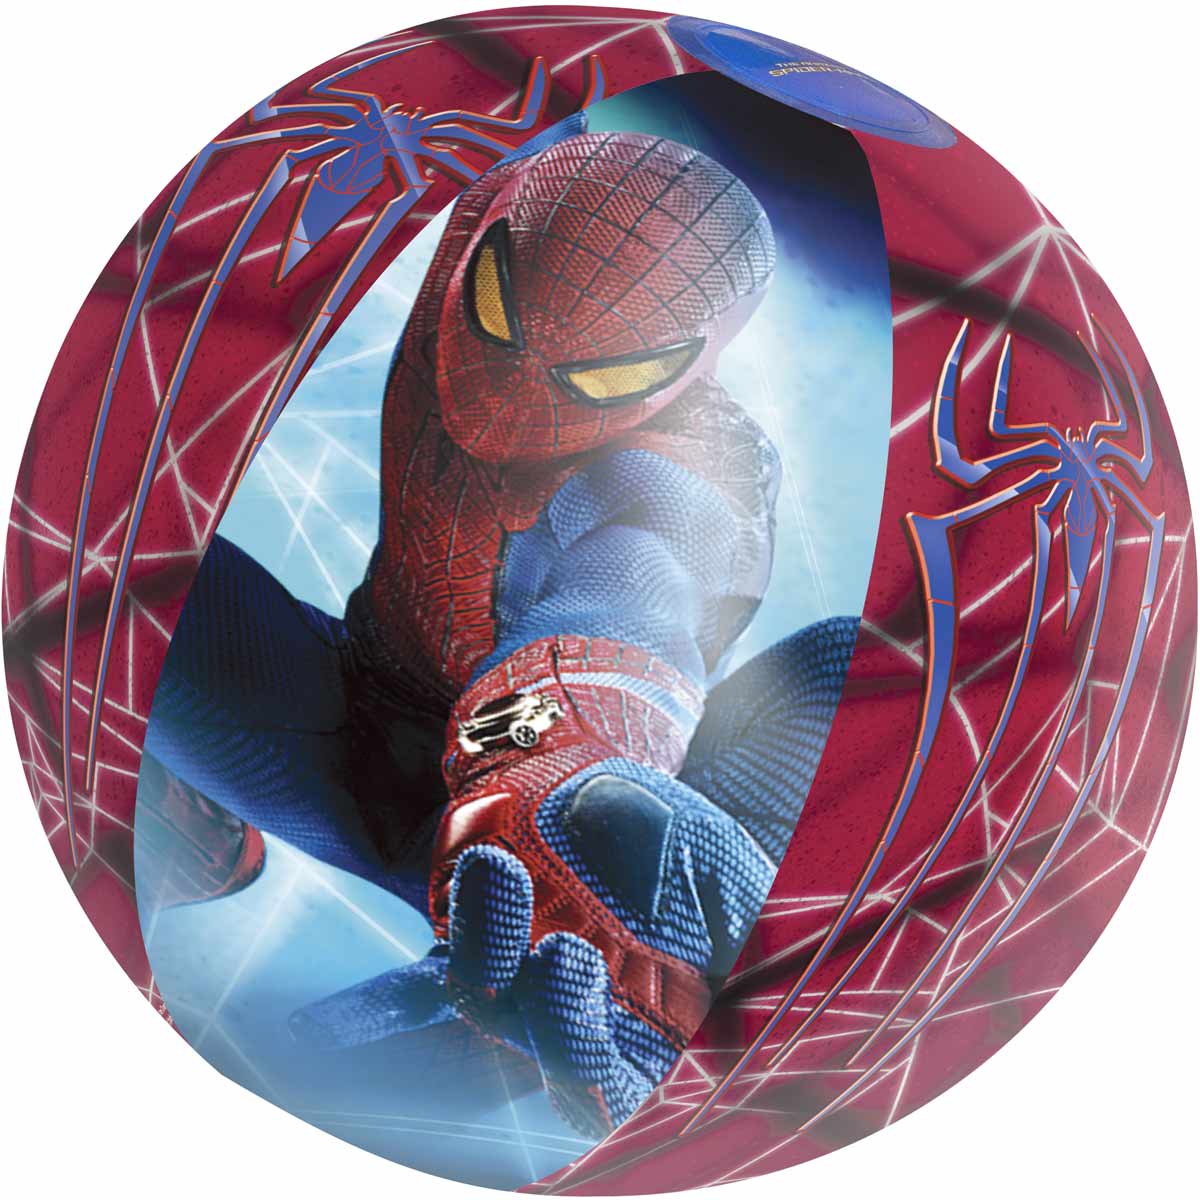 BEACH BALL - Inflatable ball - Spiderman